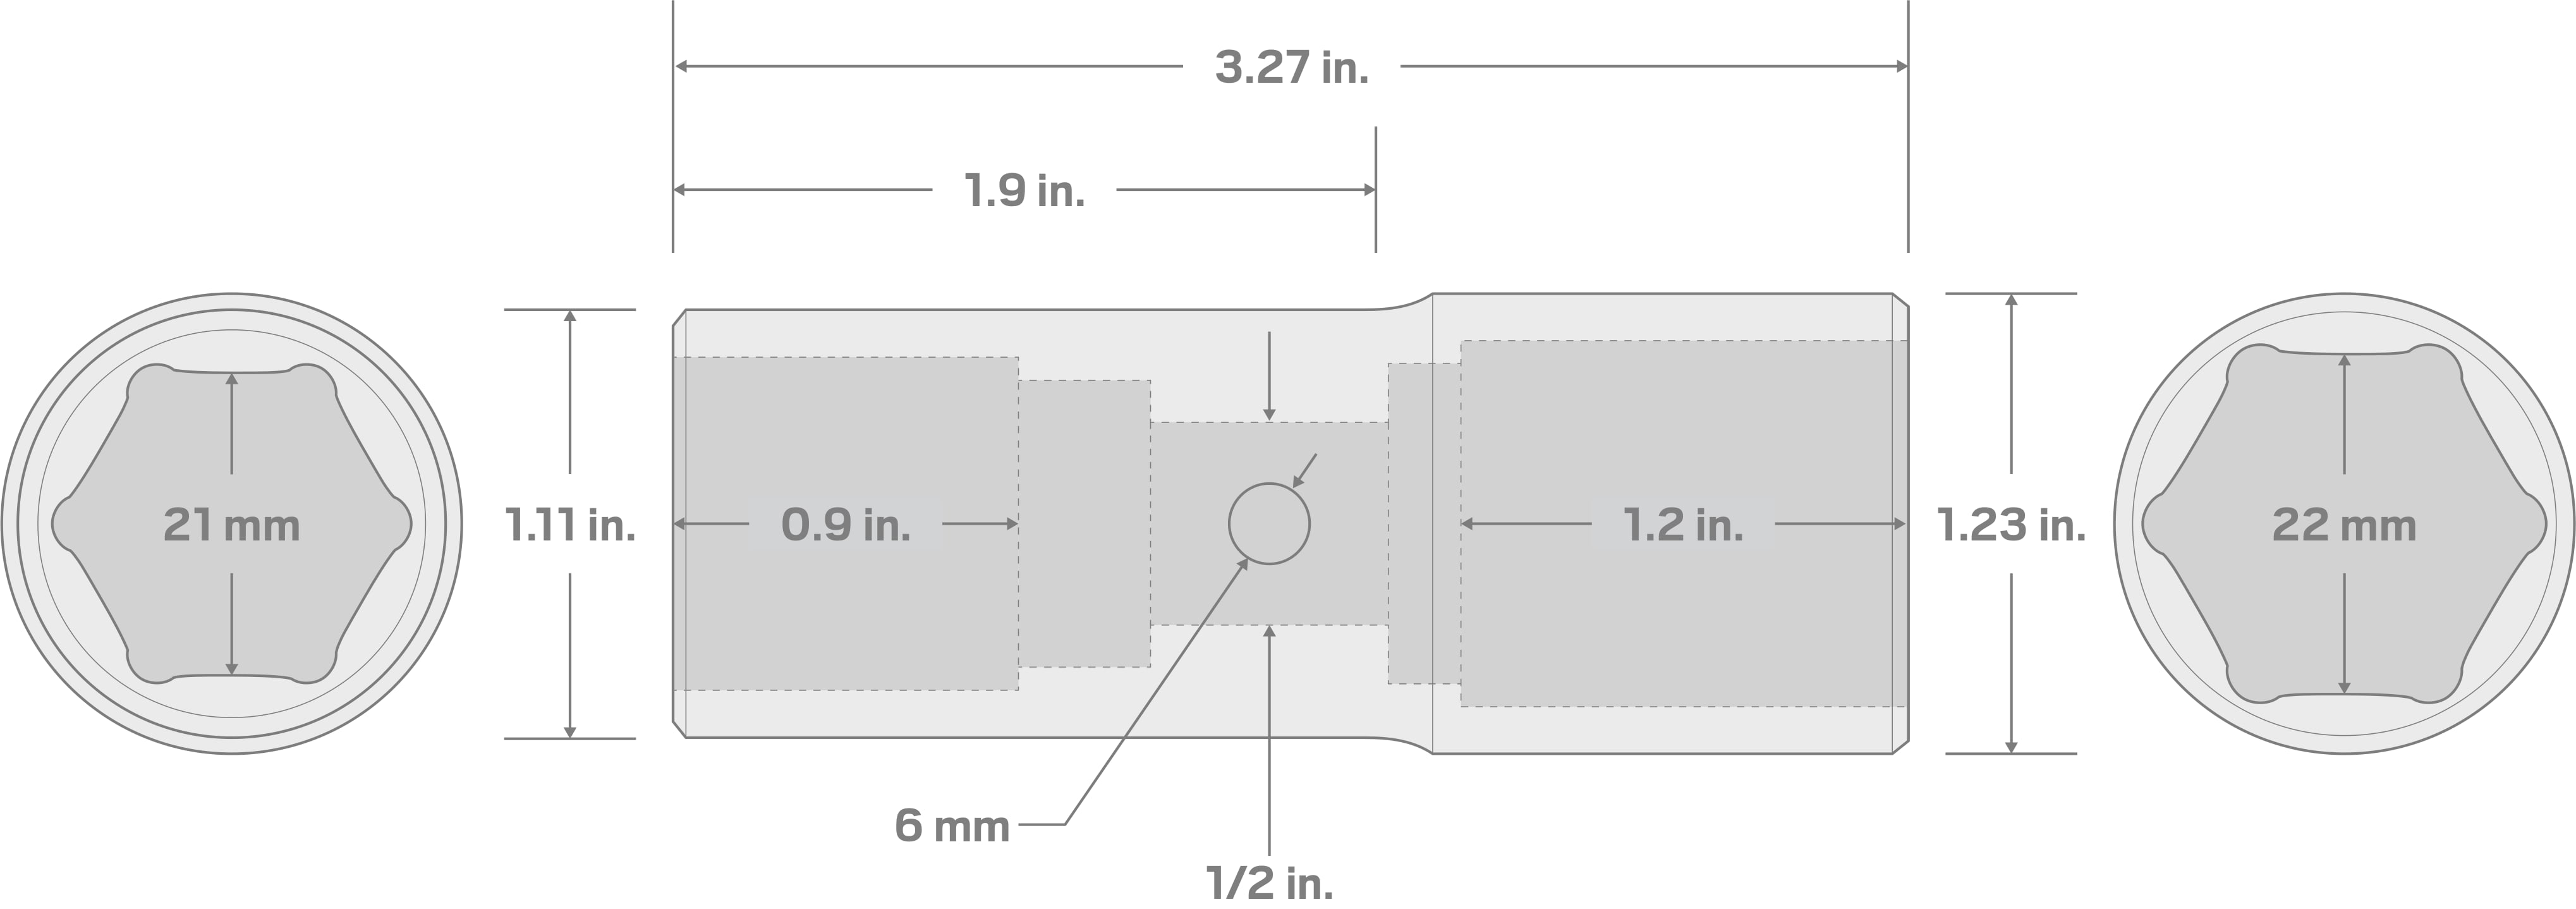 Specs for 1/2 Inch Drive 21 x 22 mm Thin Wall Impact Flip Socket